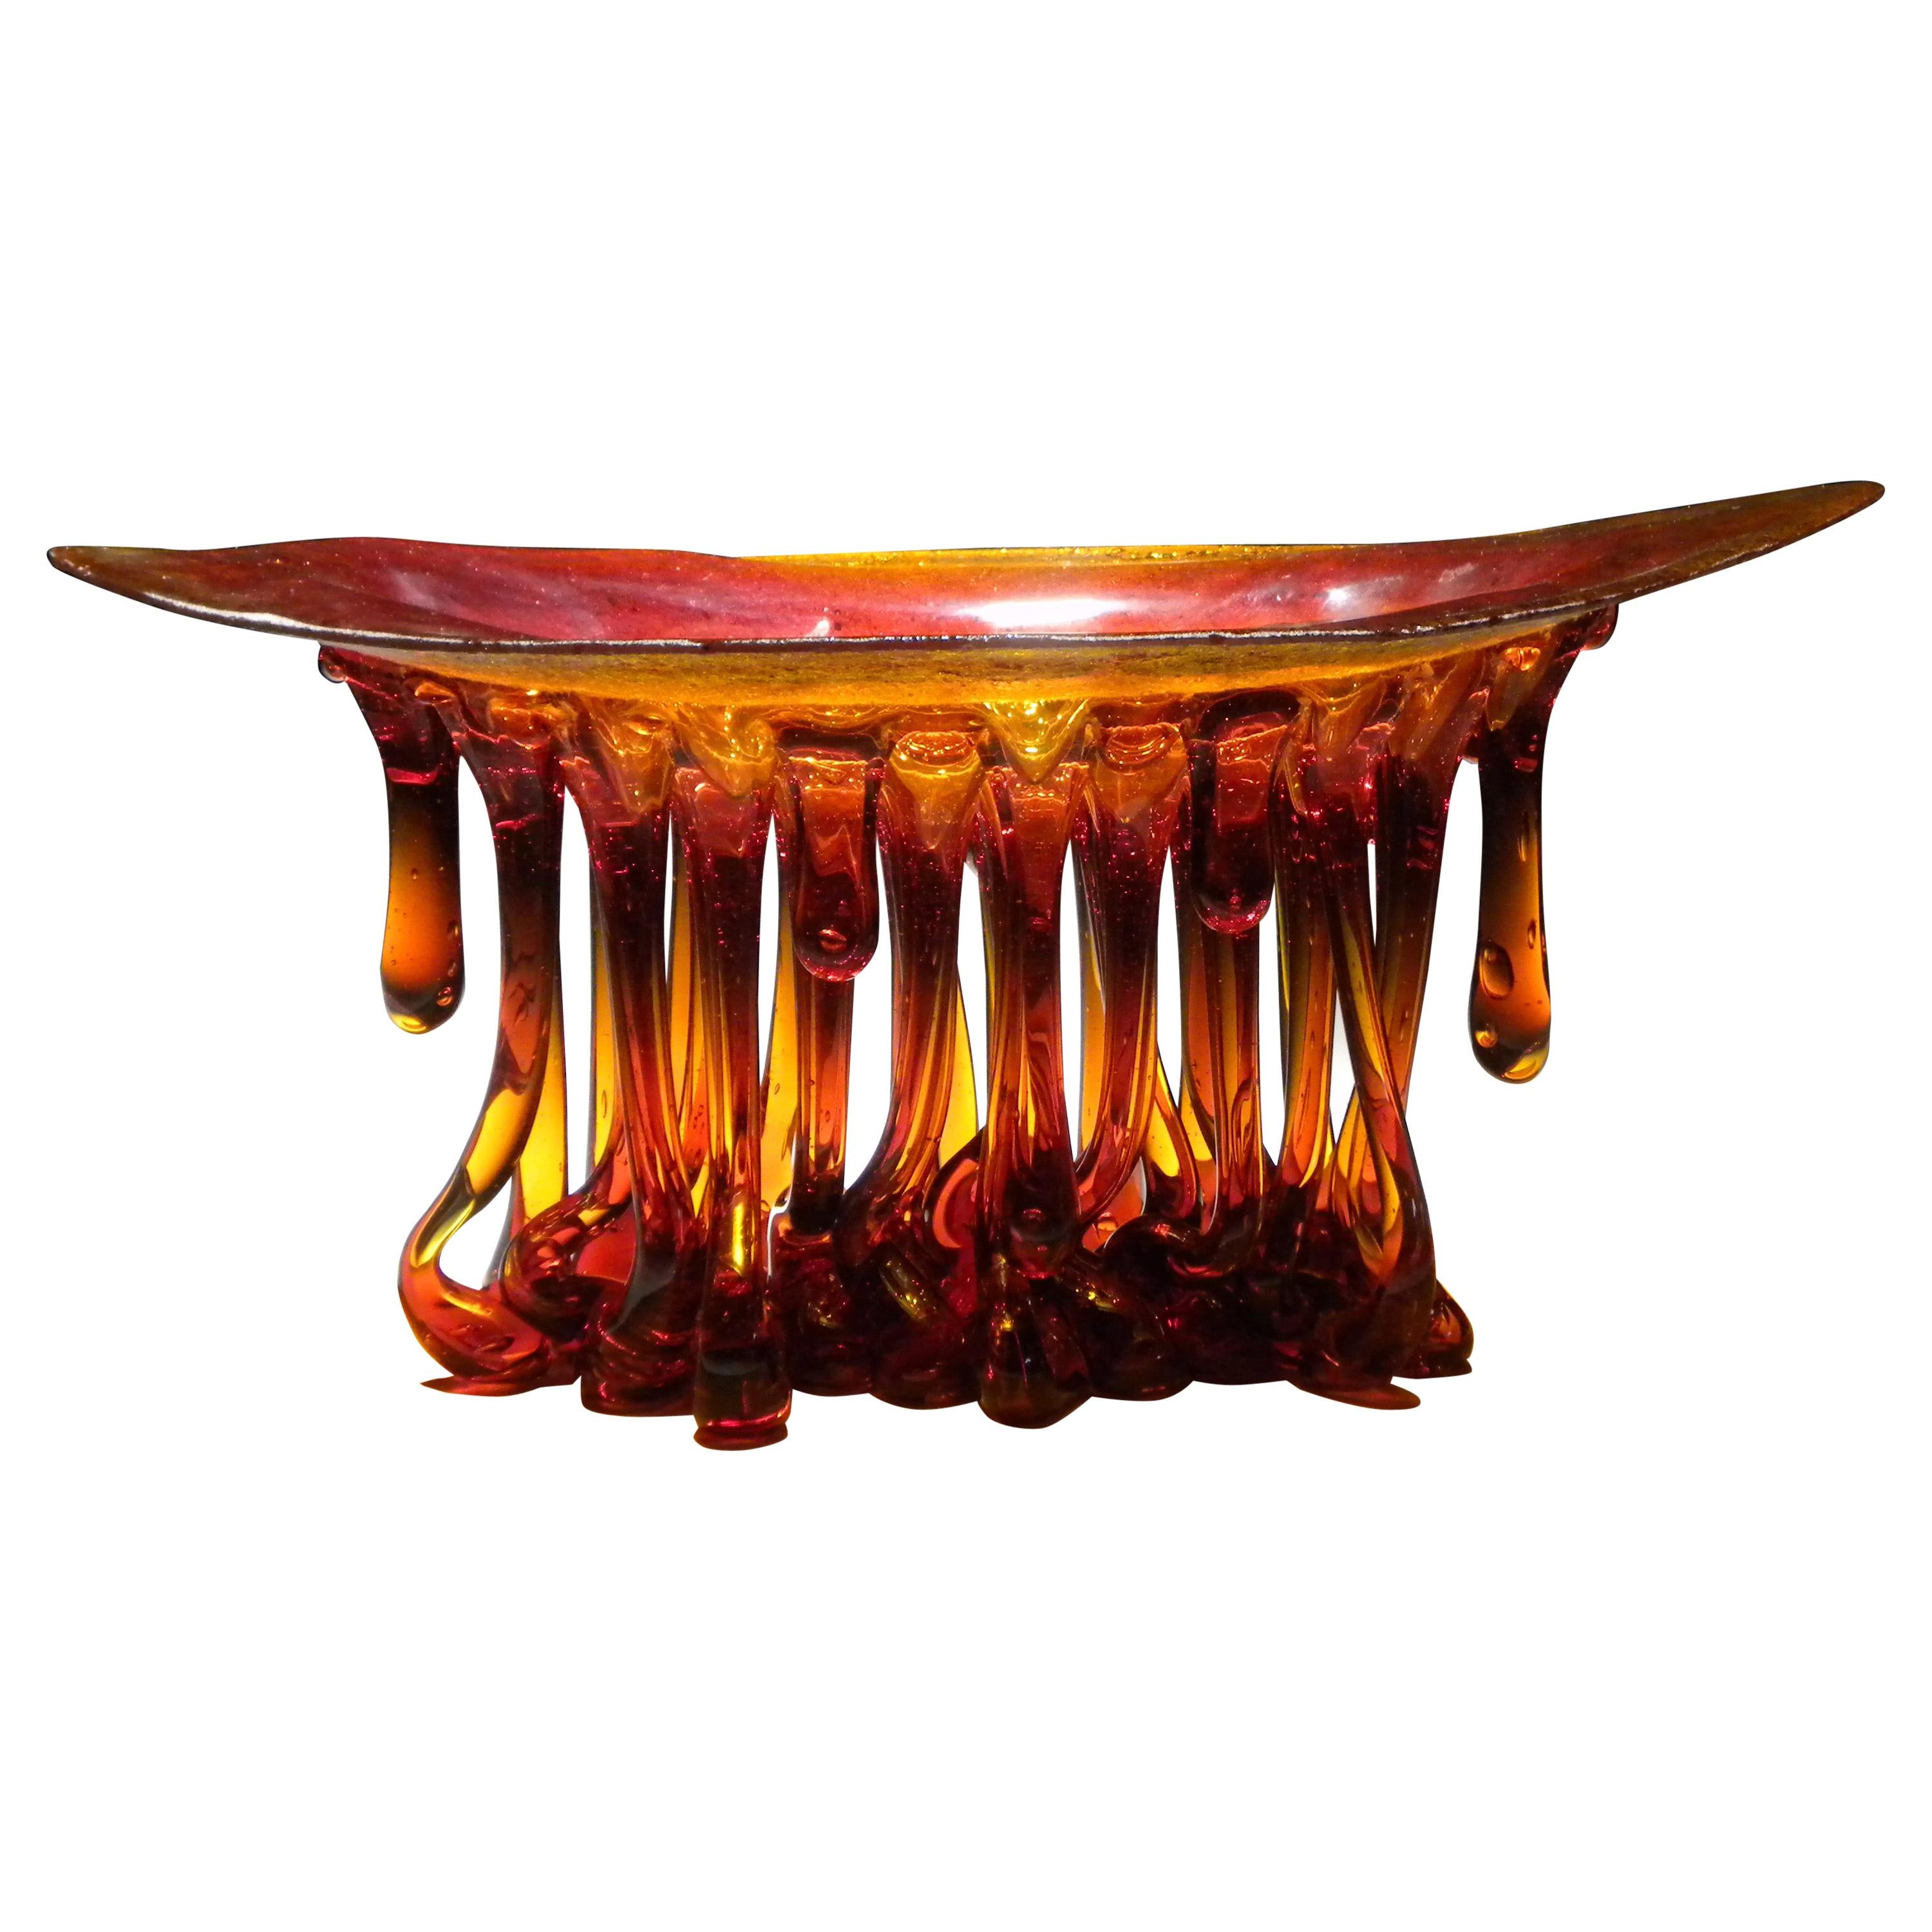 "Amber" Jellifish, Murano Glass, Handmade in Italy, Contemporary Design 2020